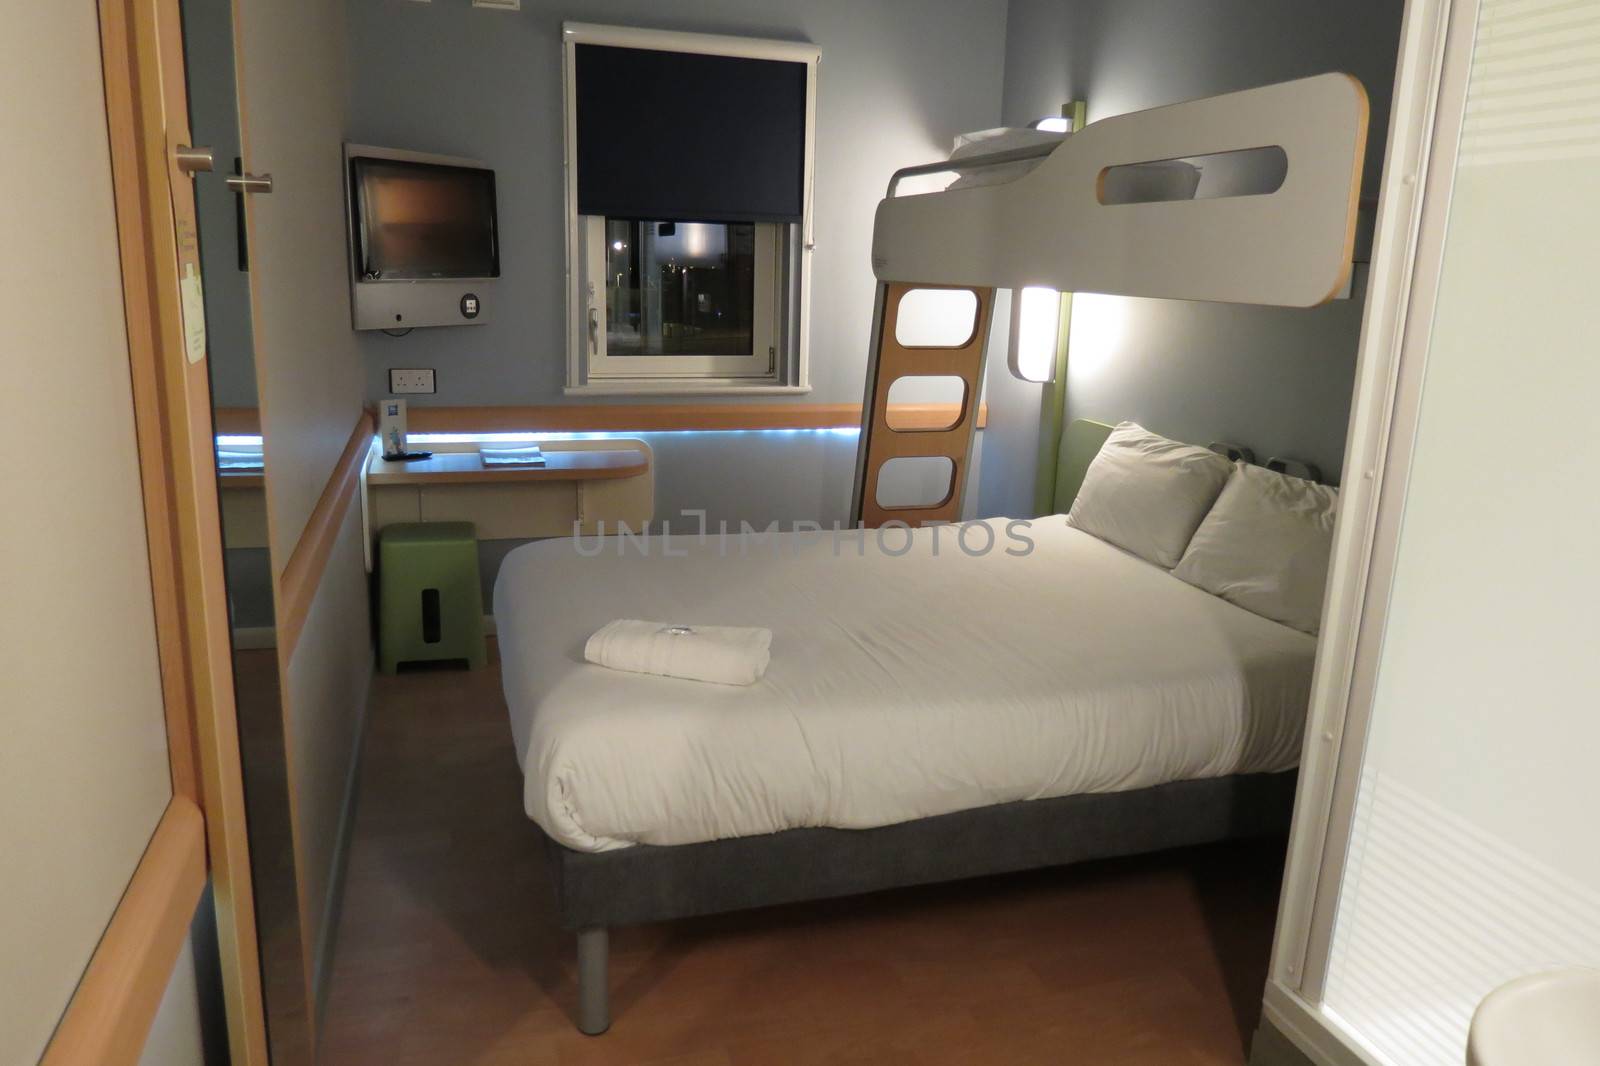 EDINBURGH, SCOTLAND, UK - CIRCA AUGUST 2015: Ibis budget hotel room with bed